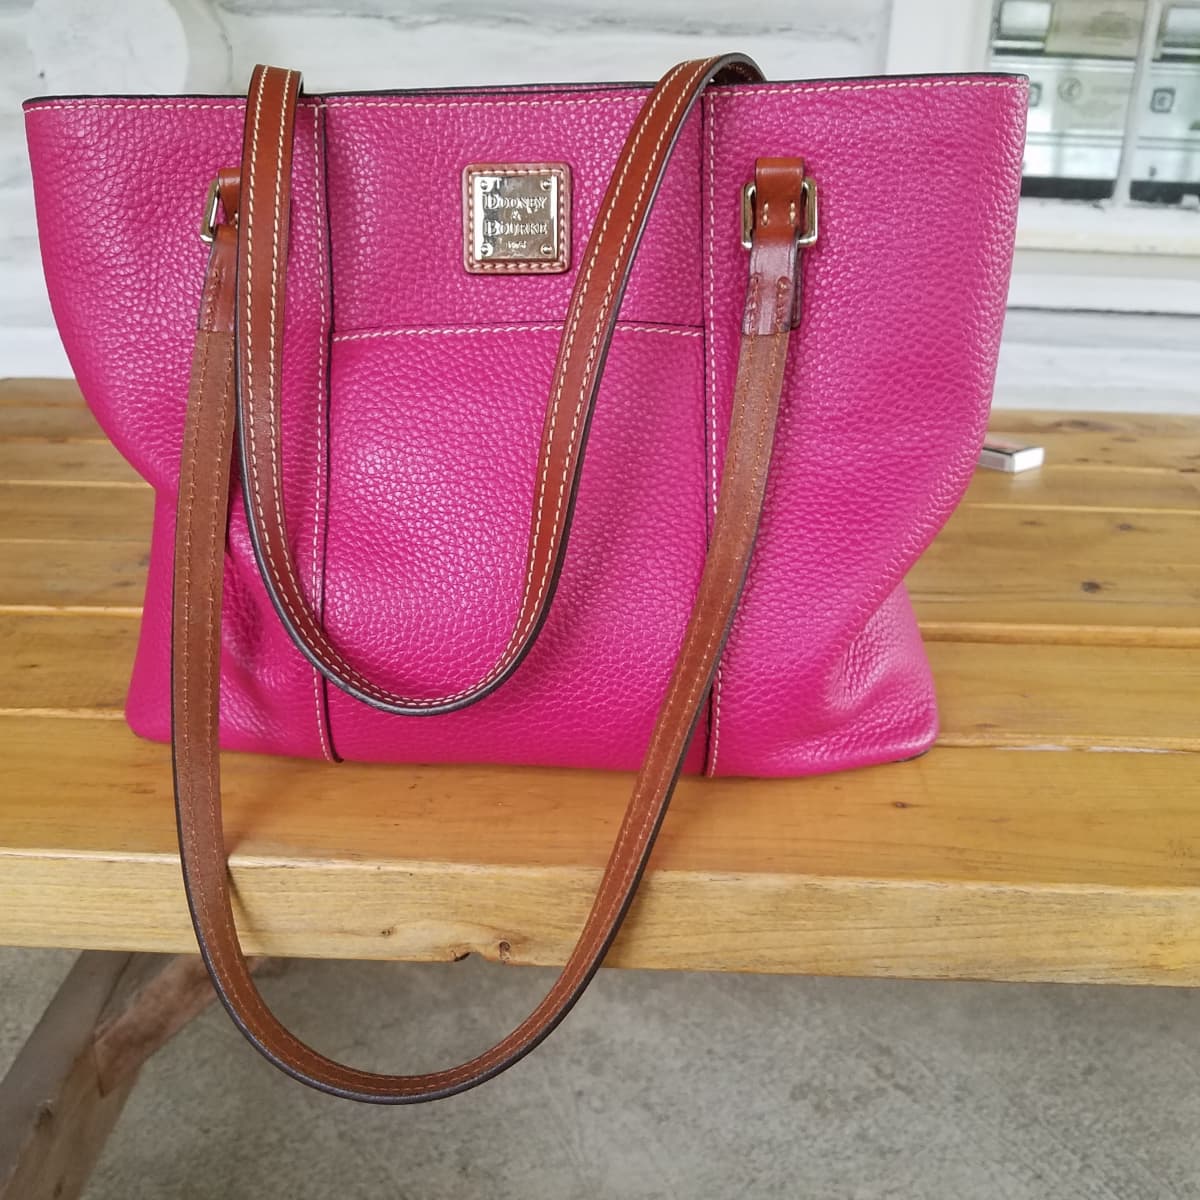 dooney bourke handbags, Small Bag Gray Color | eBay